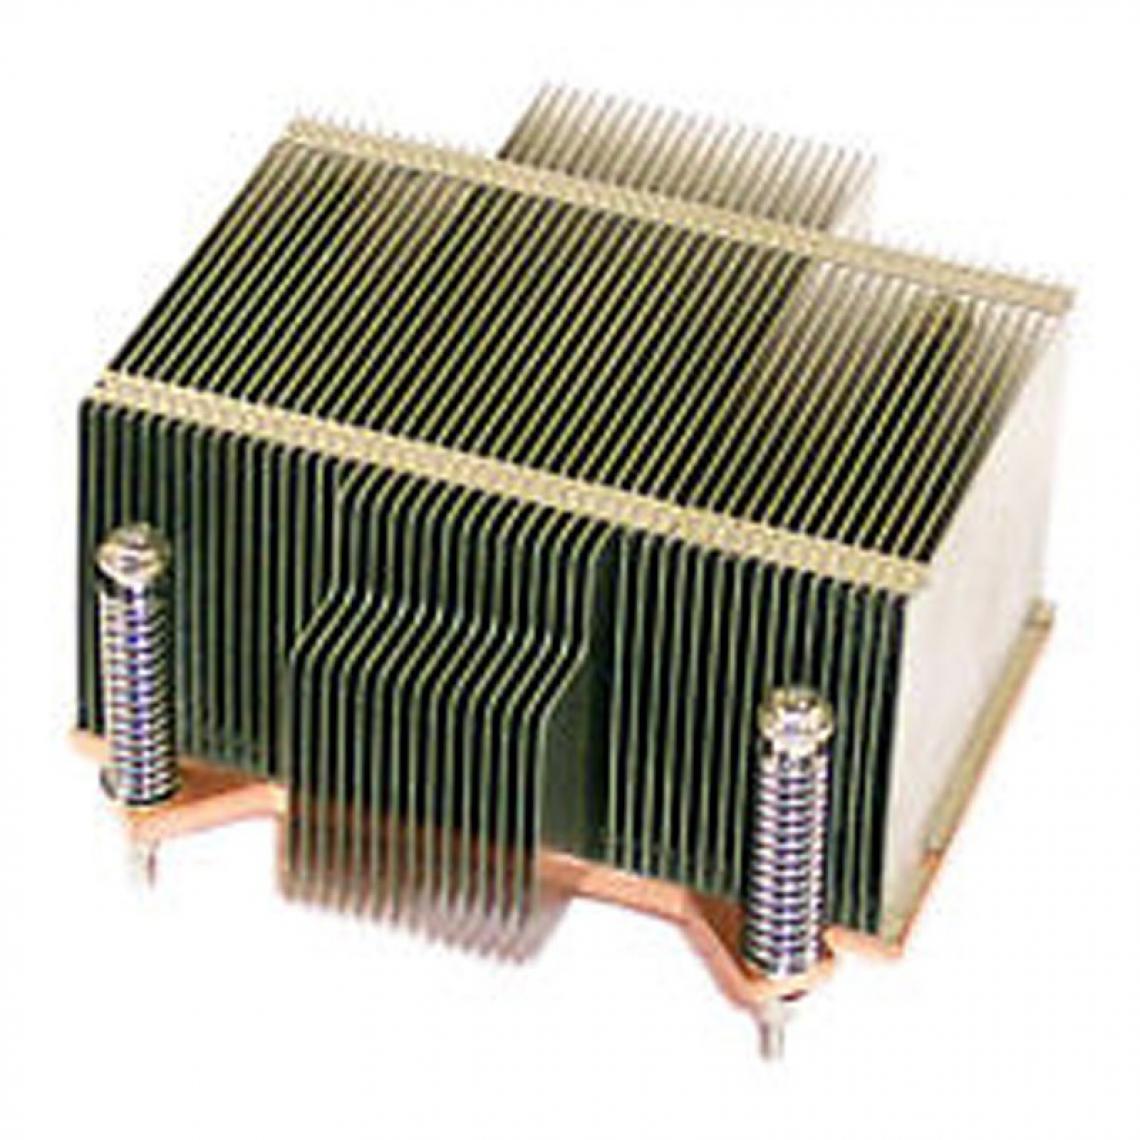 Fujitsu - Dissipateur Processeur Fujitsu Siemens V26898-B860-V1 CPU Heatsink Scenic P320 - Dissipateur mémoire PC